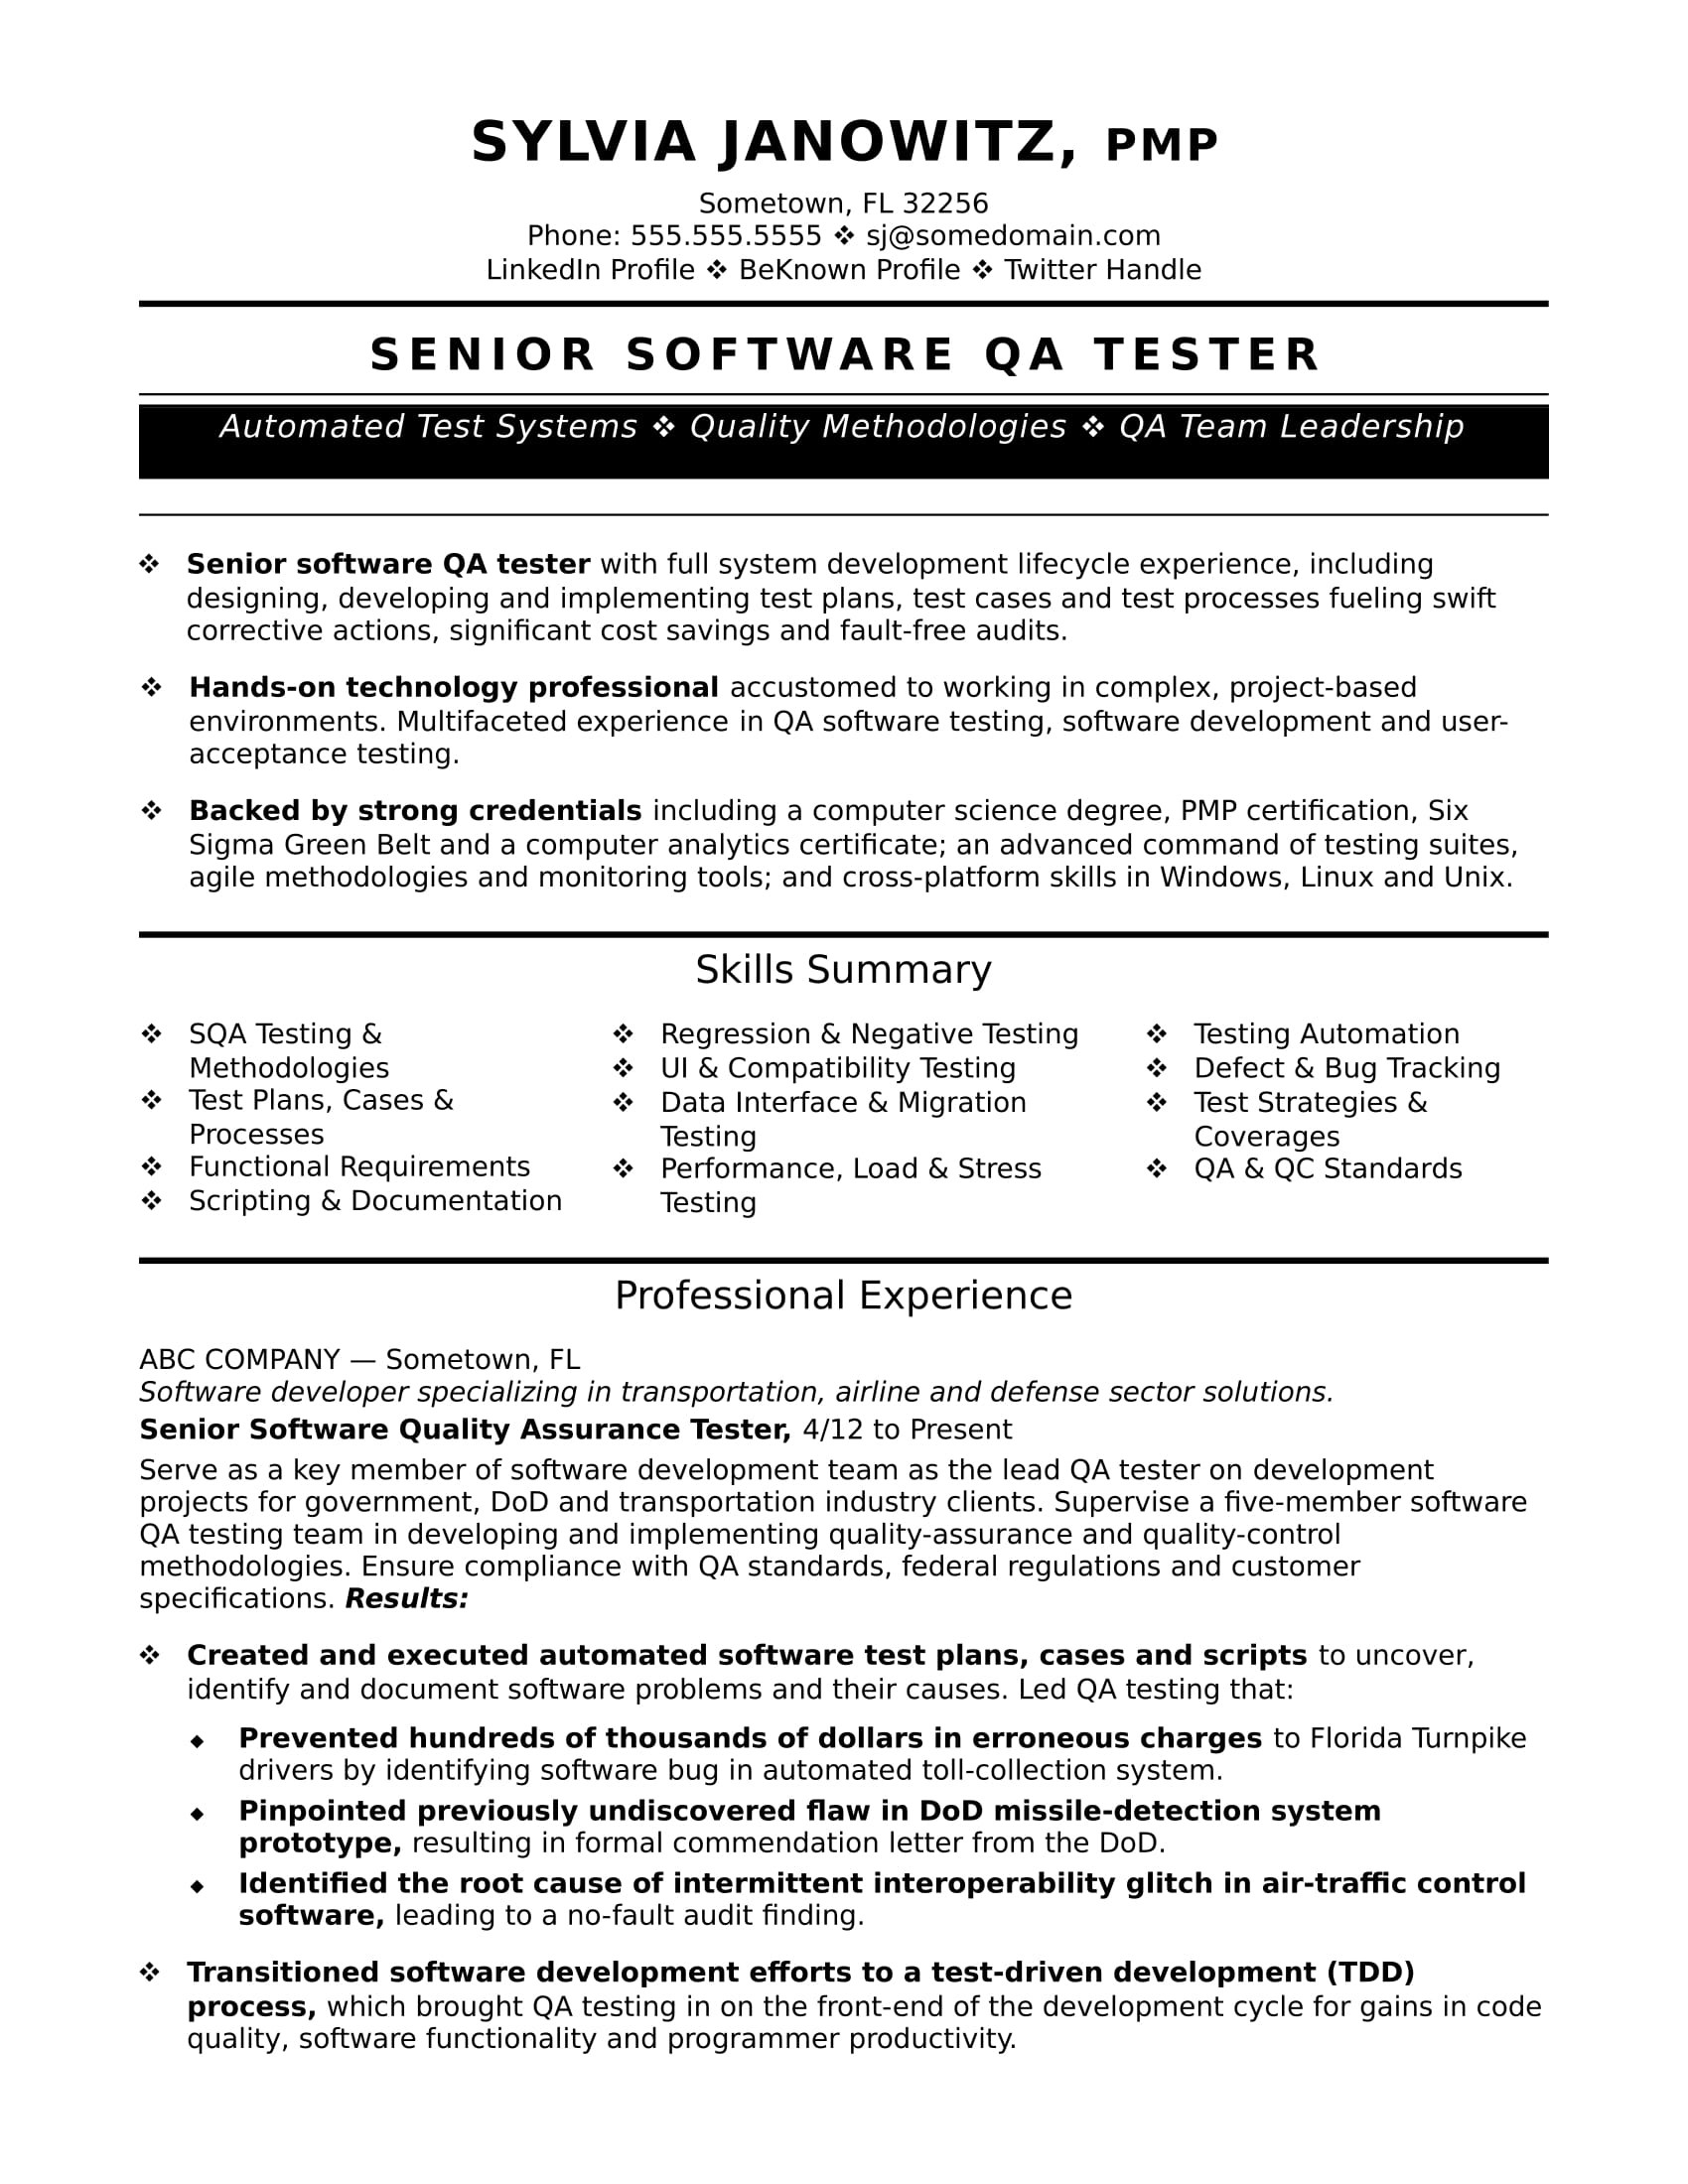 Sample Resume for Ecommerce Qa Tester Experienced Qa software Tester Resume Sample